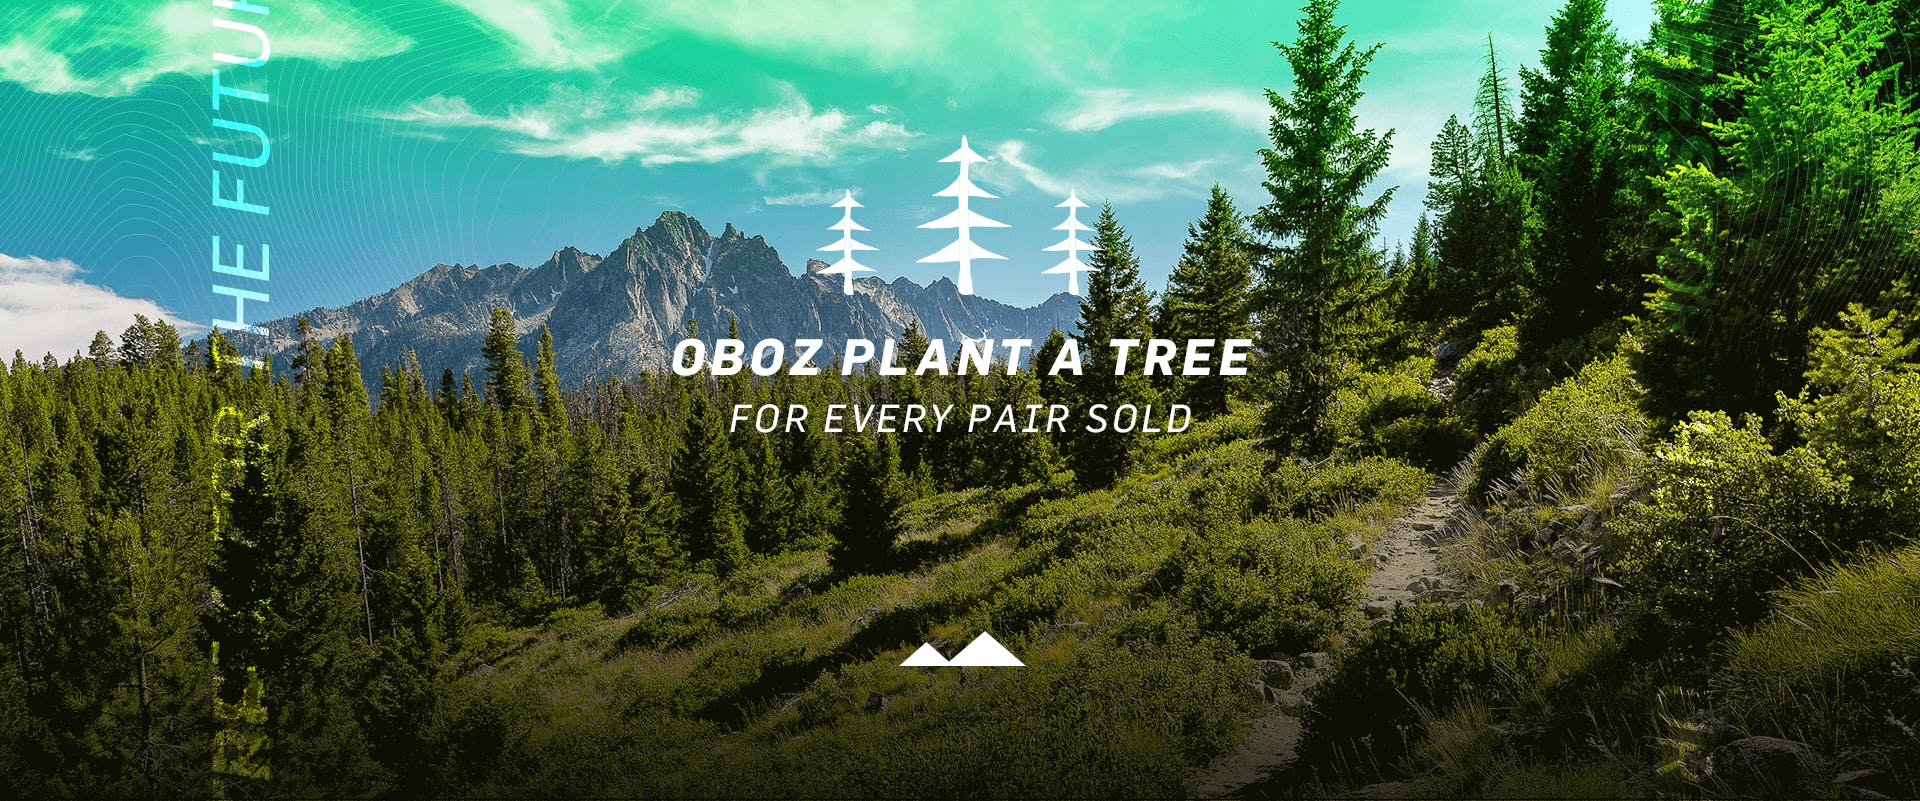 Oboz plant a tree